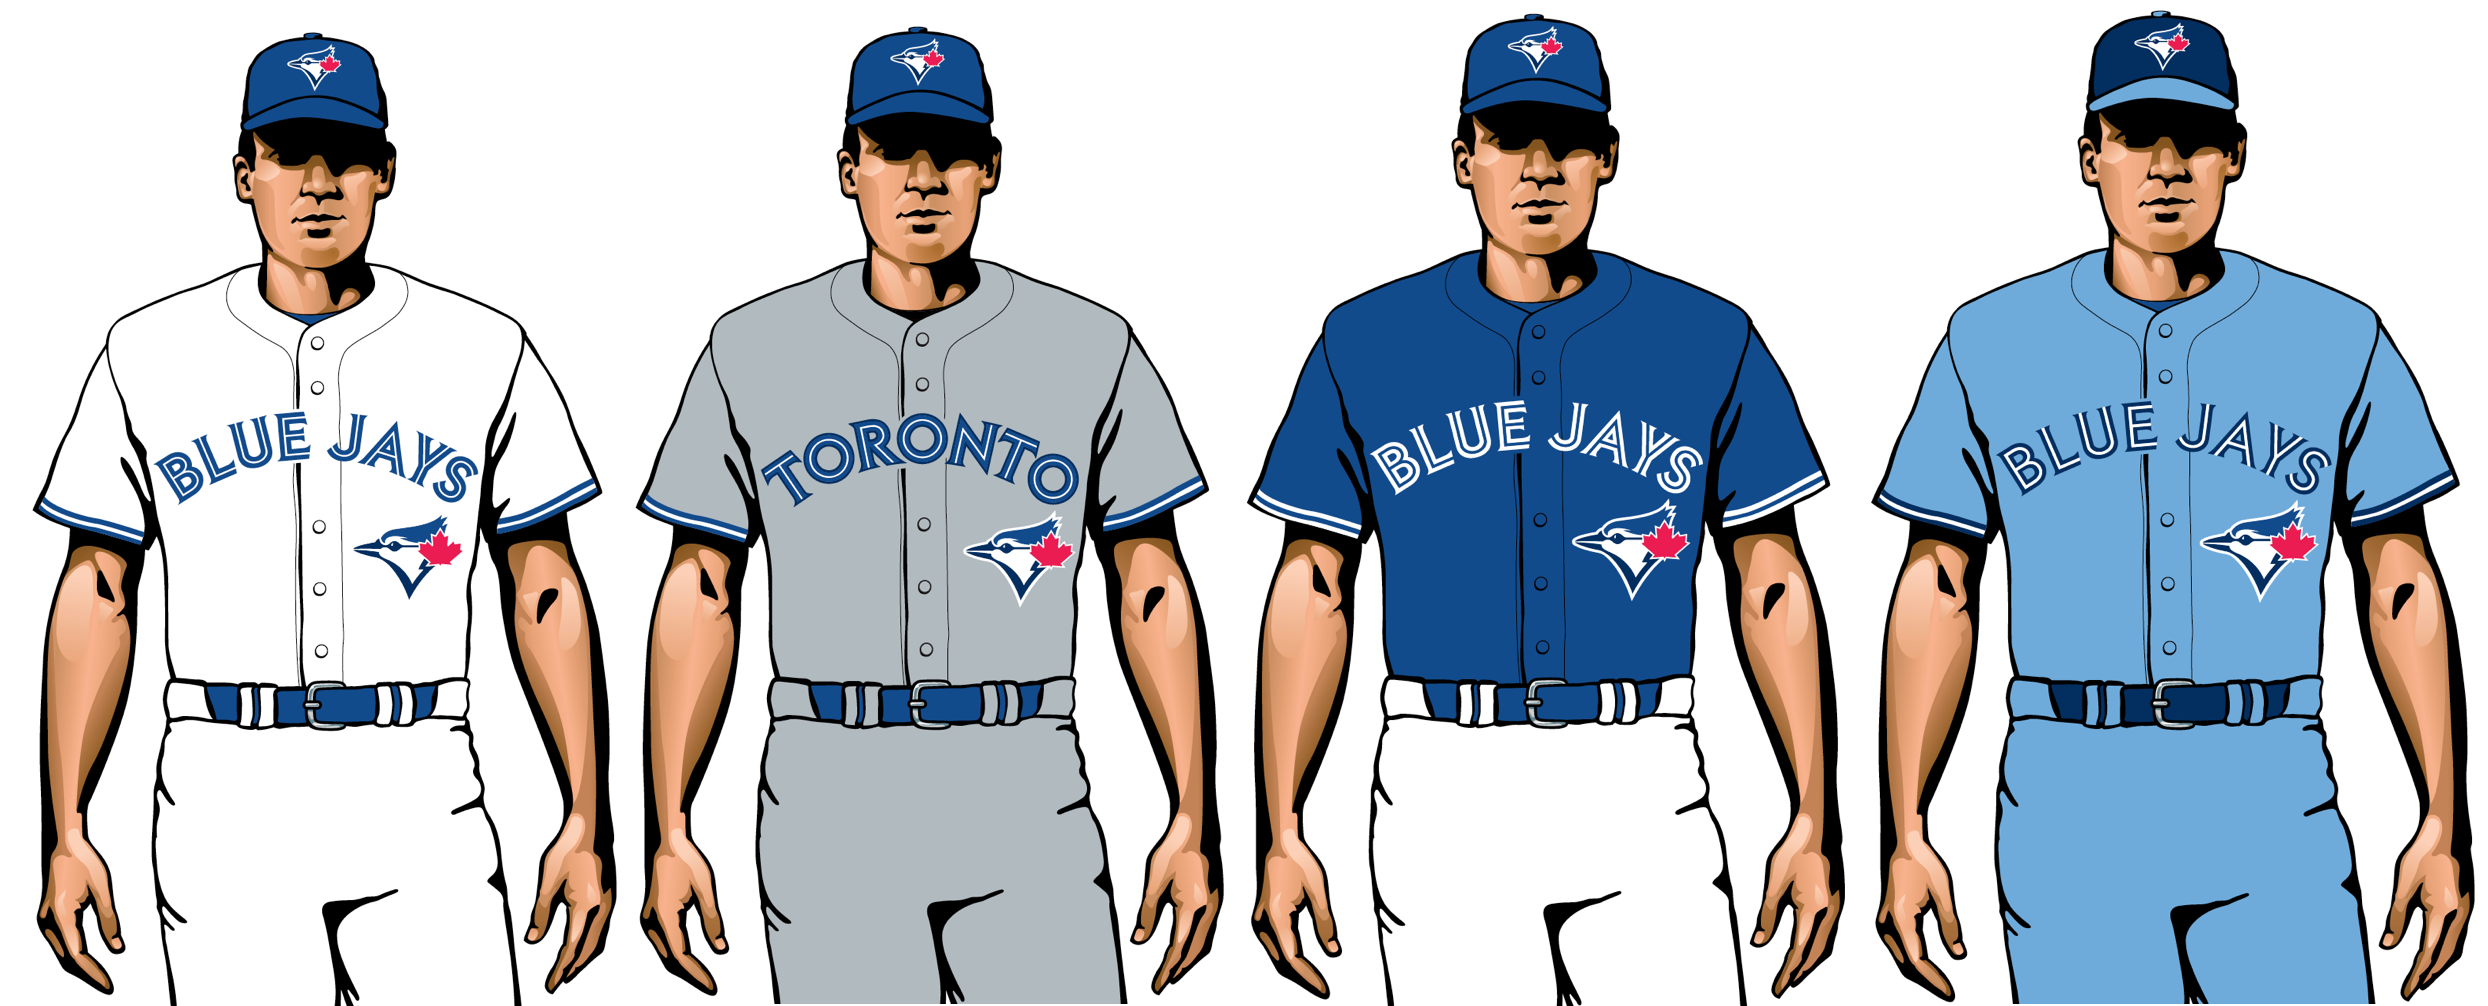 blue jays 2020 uniforms